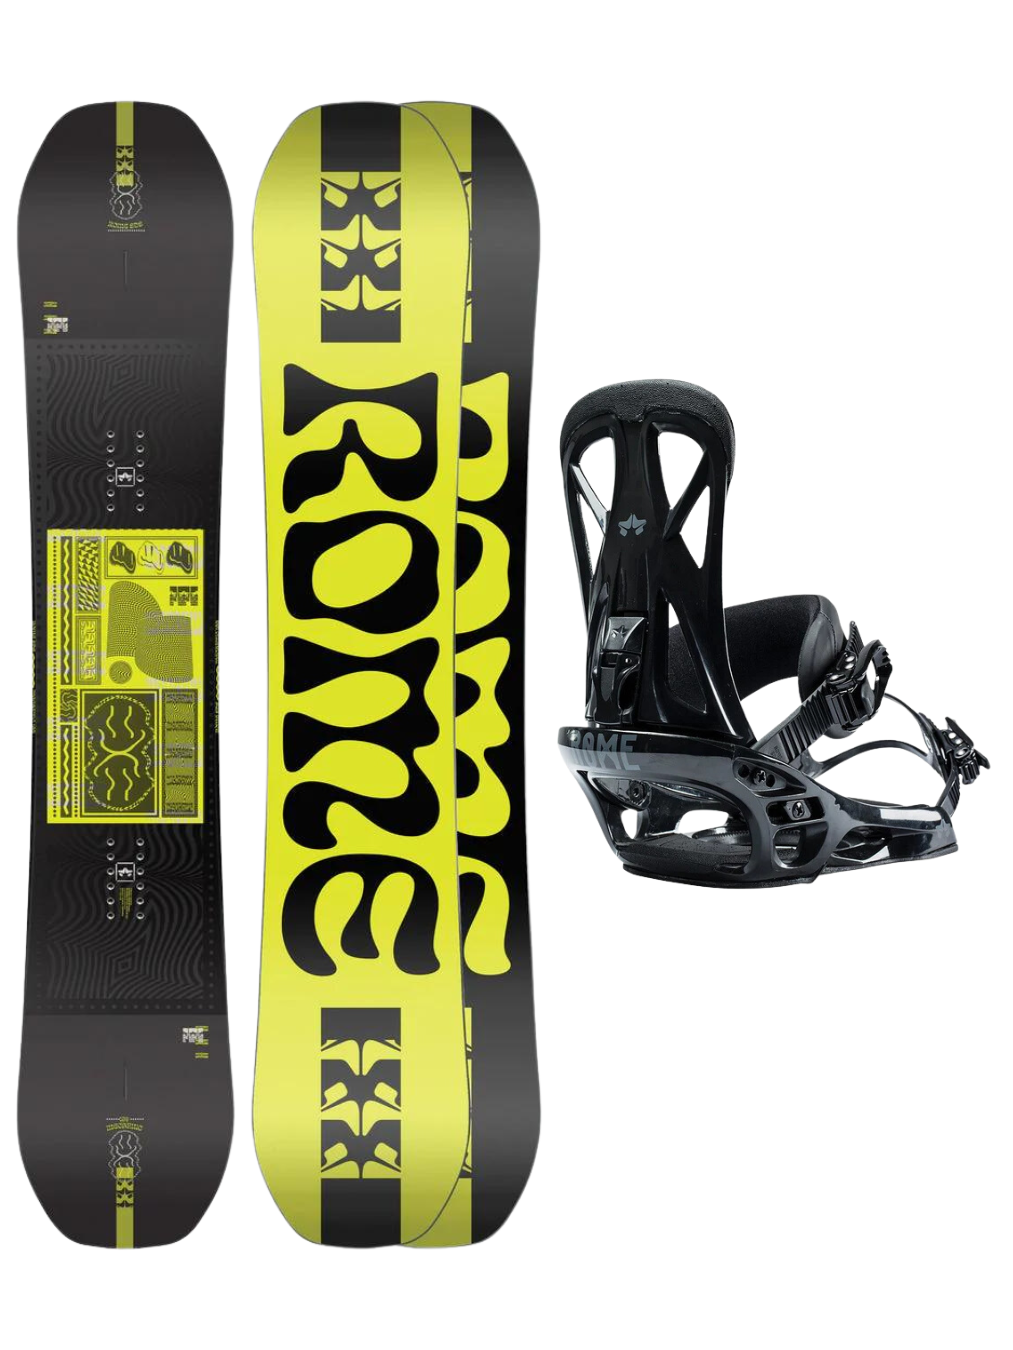 Pack snowboard: Rome Mechanic 156 + Rome United | Packs Snowboard: Tabla + Fijación | Snowboard Shop | surfdevils.com